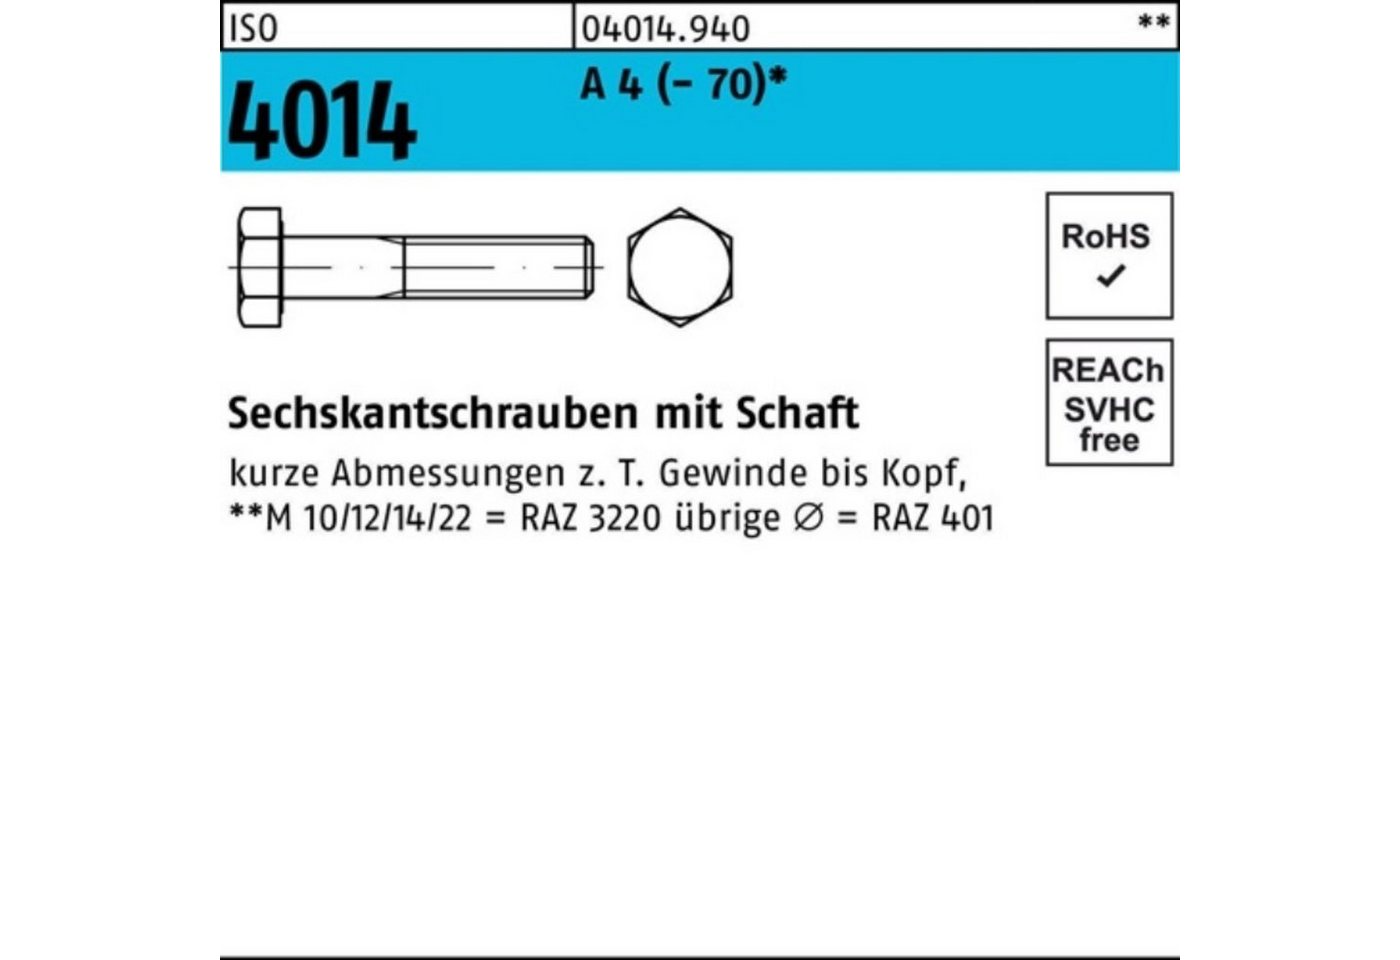 Bufab Sechskantschraube 100er Pack Sechskantschraube ISO 4014 Schaft M20x 120 A 4 (70) 1 St von Bufab